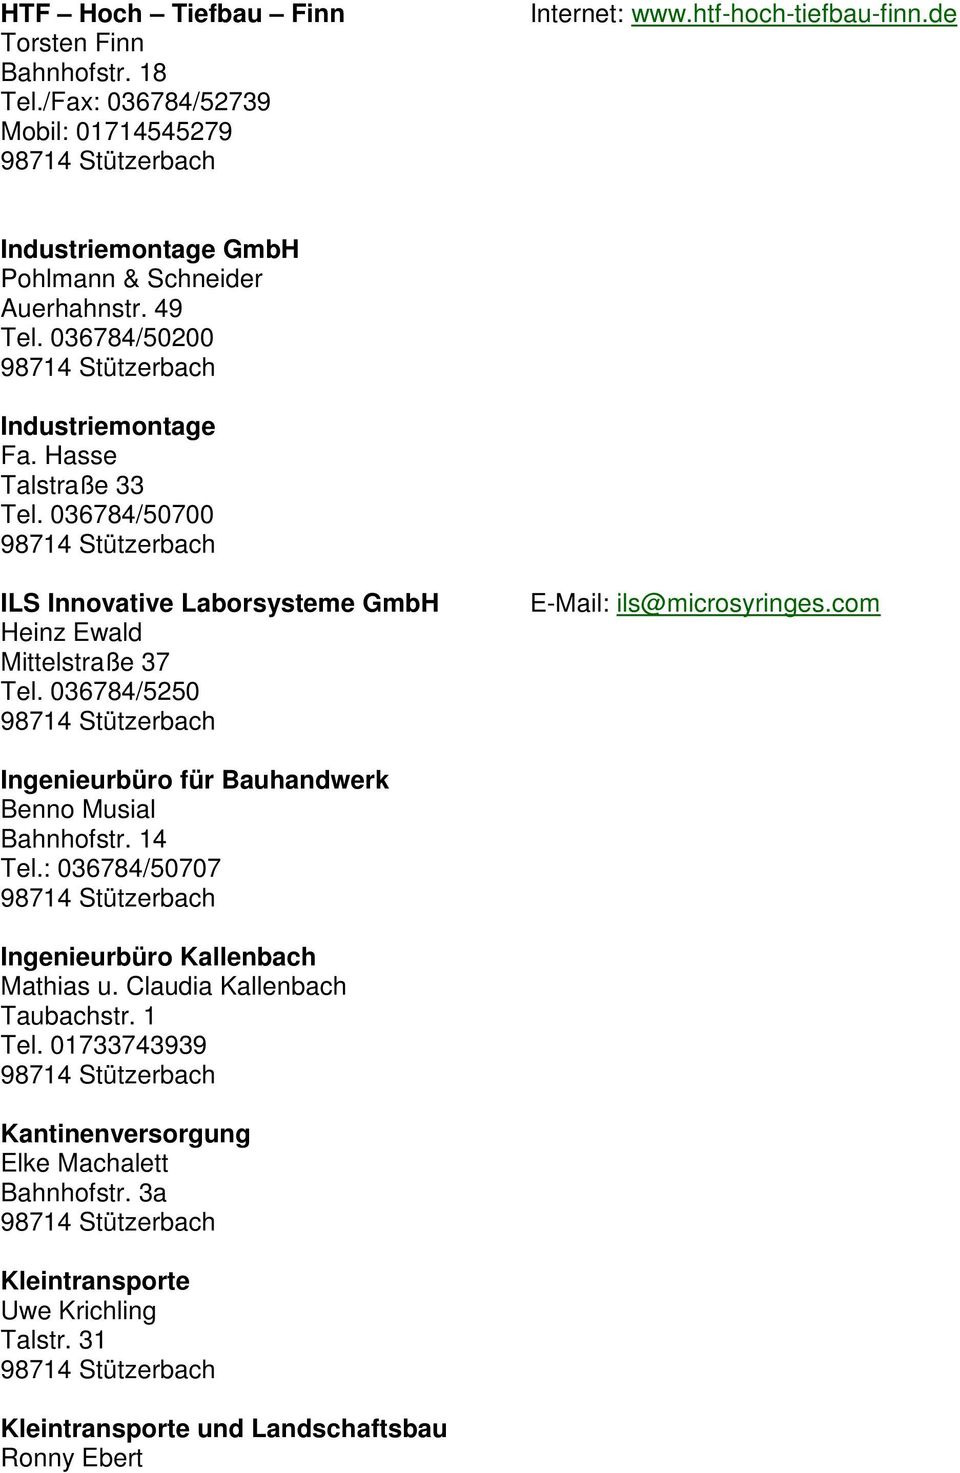 036784/50700 ILS Innovative Laborsysteme GmbH Heinz Ewald Mittelstraße 37 Tel. 036784/5250 E-Mail: ils@microsyringes.